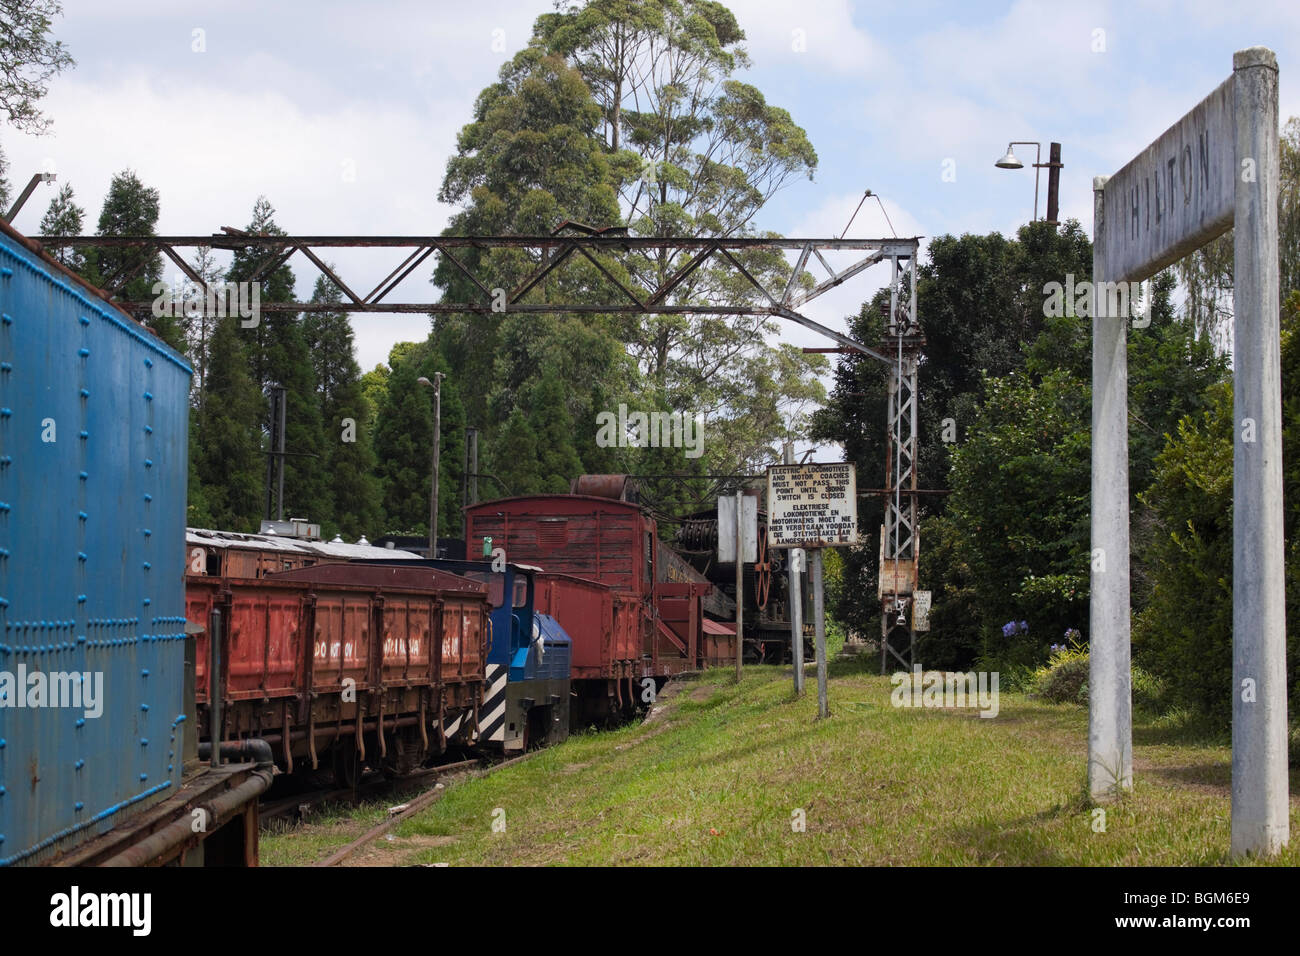 Railway goods cars on siding at Hilton station, Pietermaritzburg, Kwazulu Natal, South Africa. Color. Stock Photo